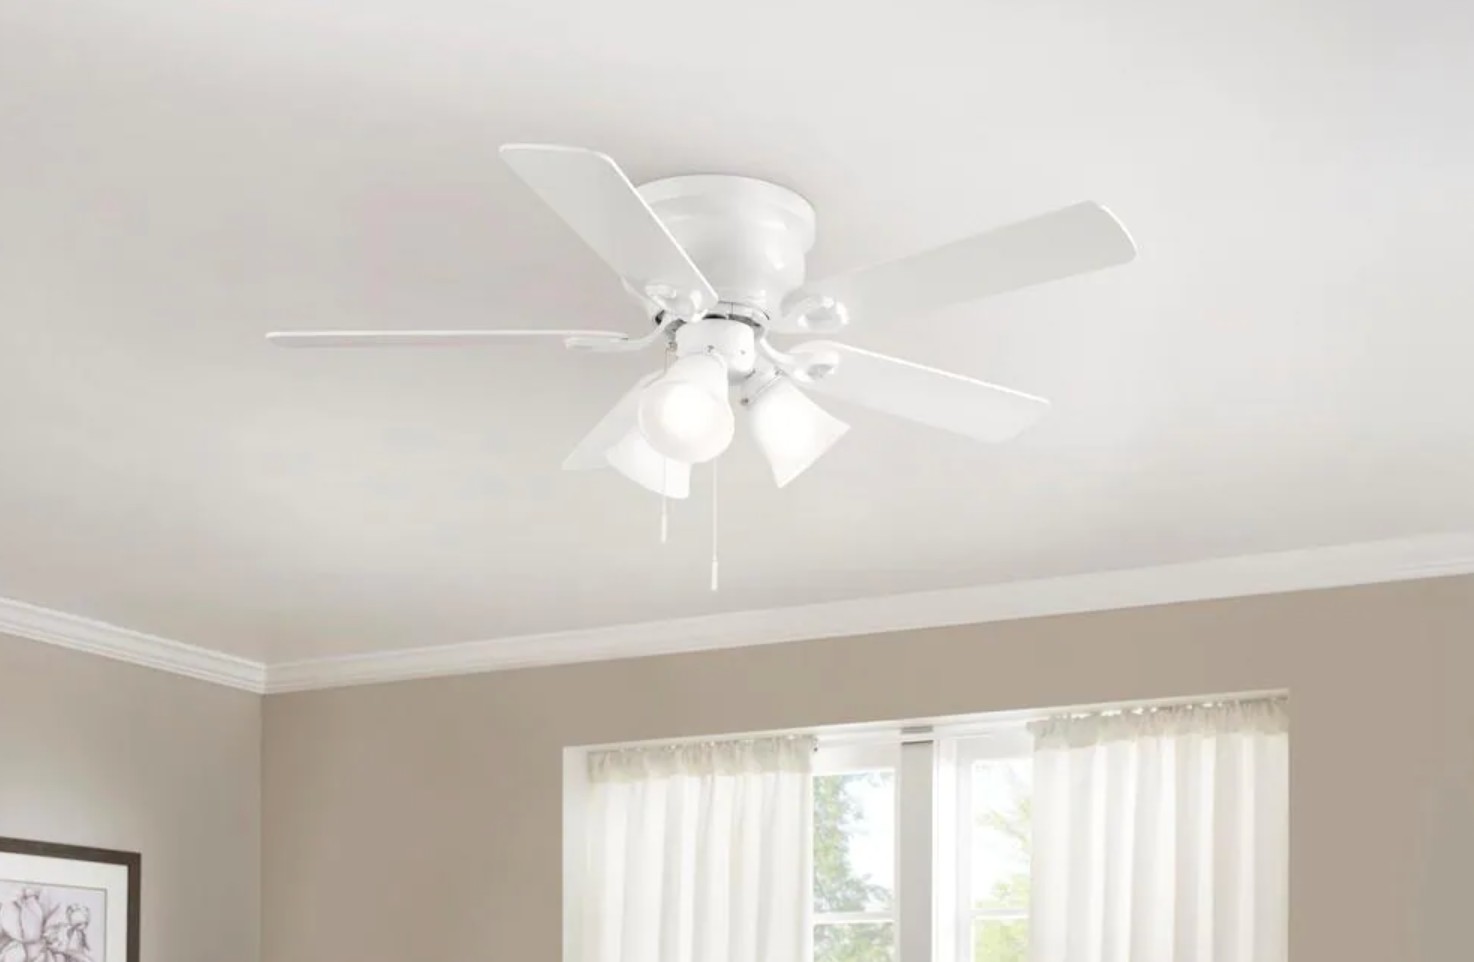 Led Indoor White Ceiling Fan